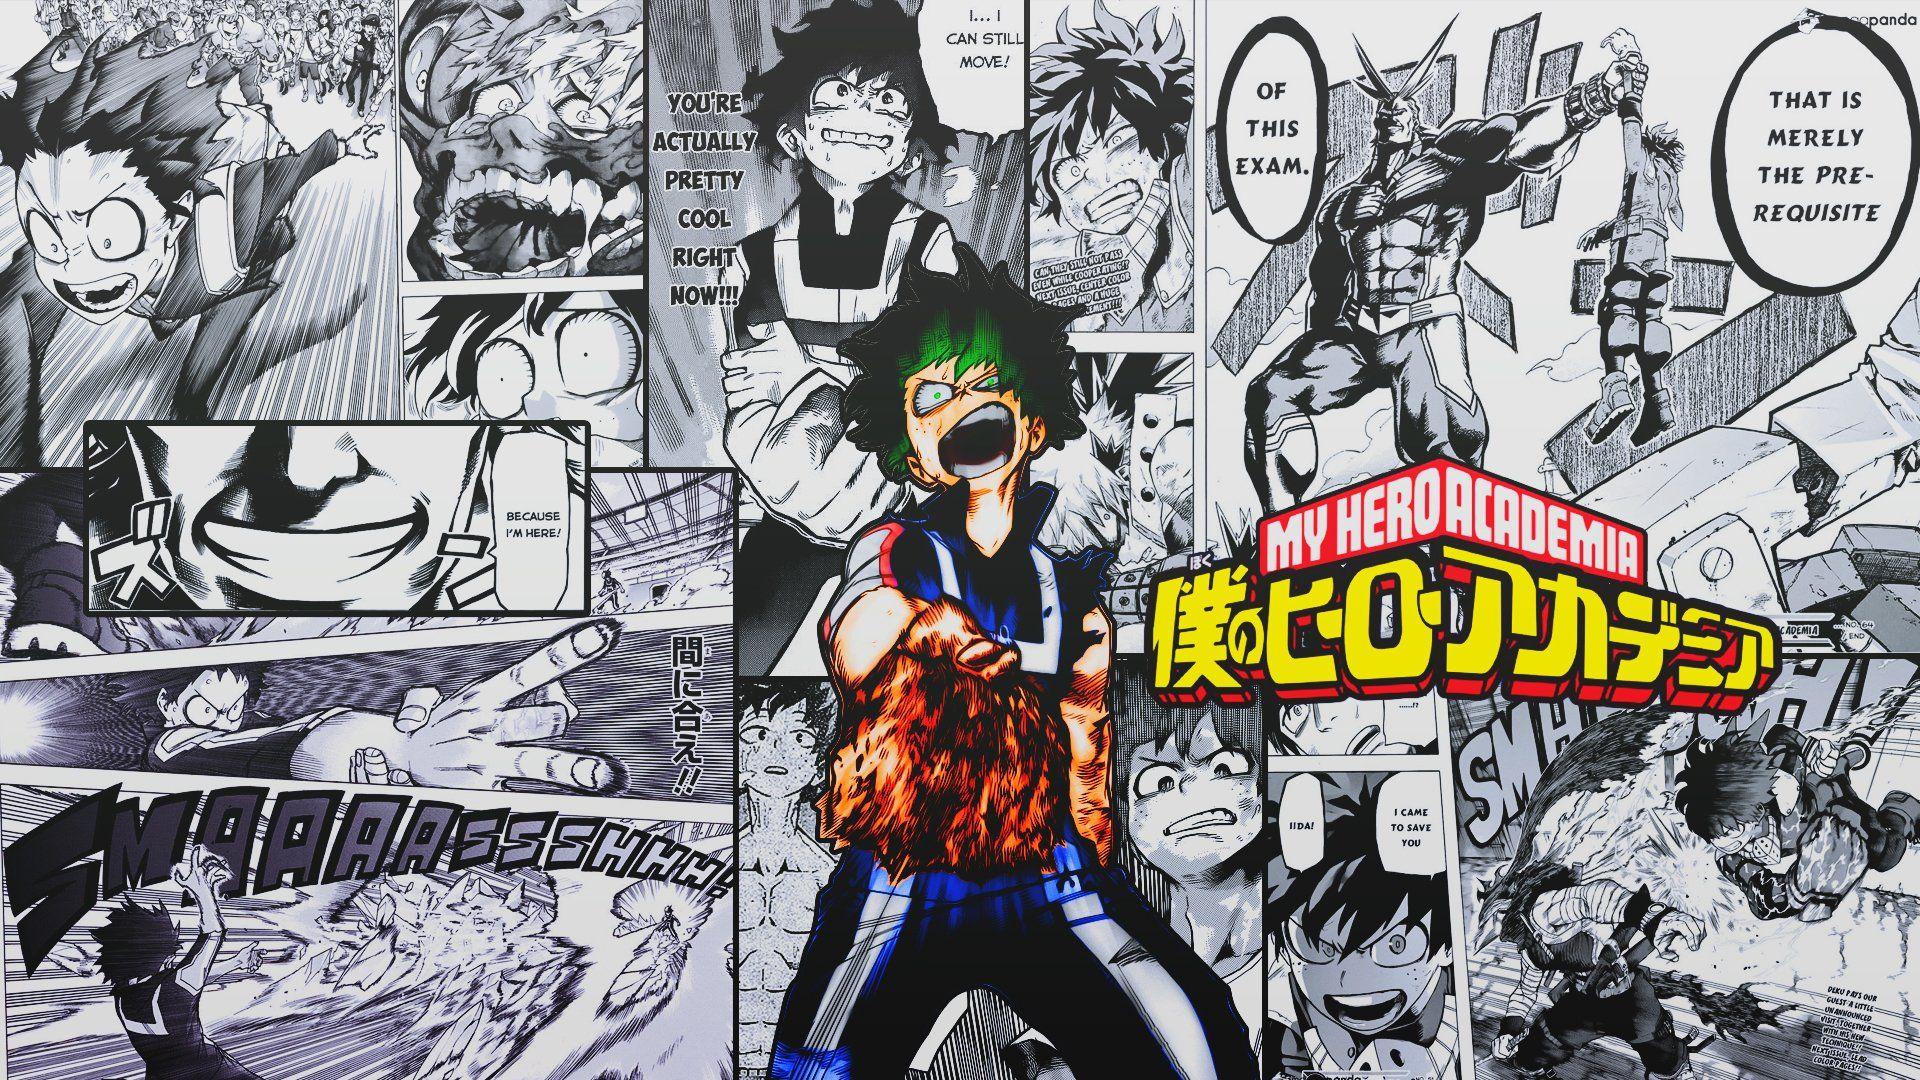 My Hero Academia Manga Wallpapers Top Free My Hero Academia Manga Backgrounds Wallpaperaccess Discover more posts about mha wallpaper. my hero academia manga wallpapers top